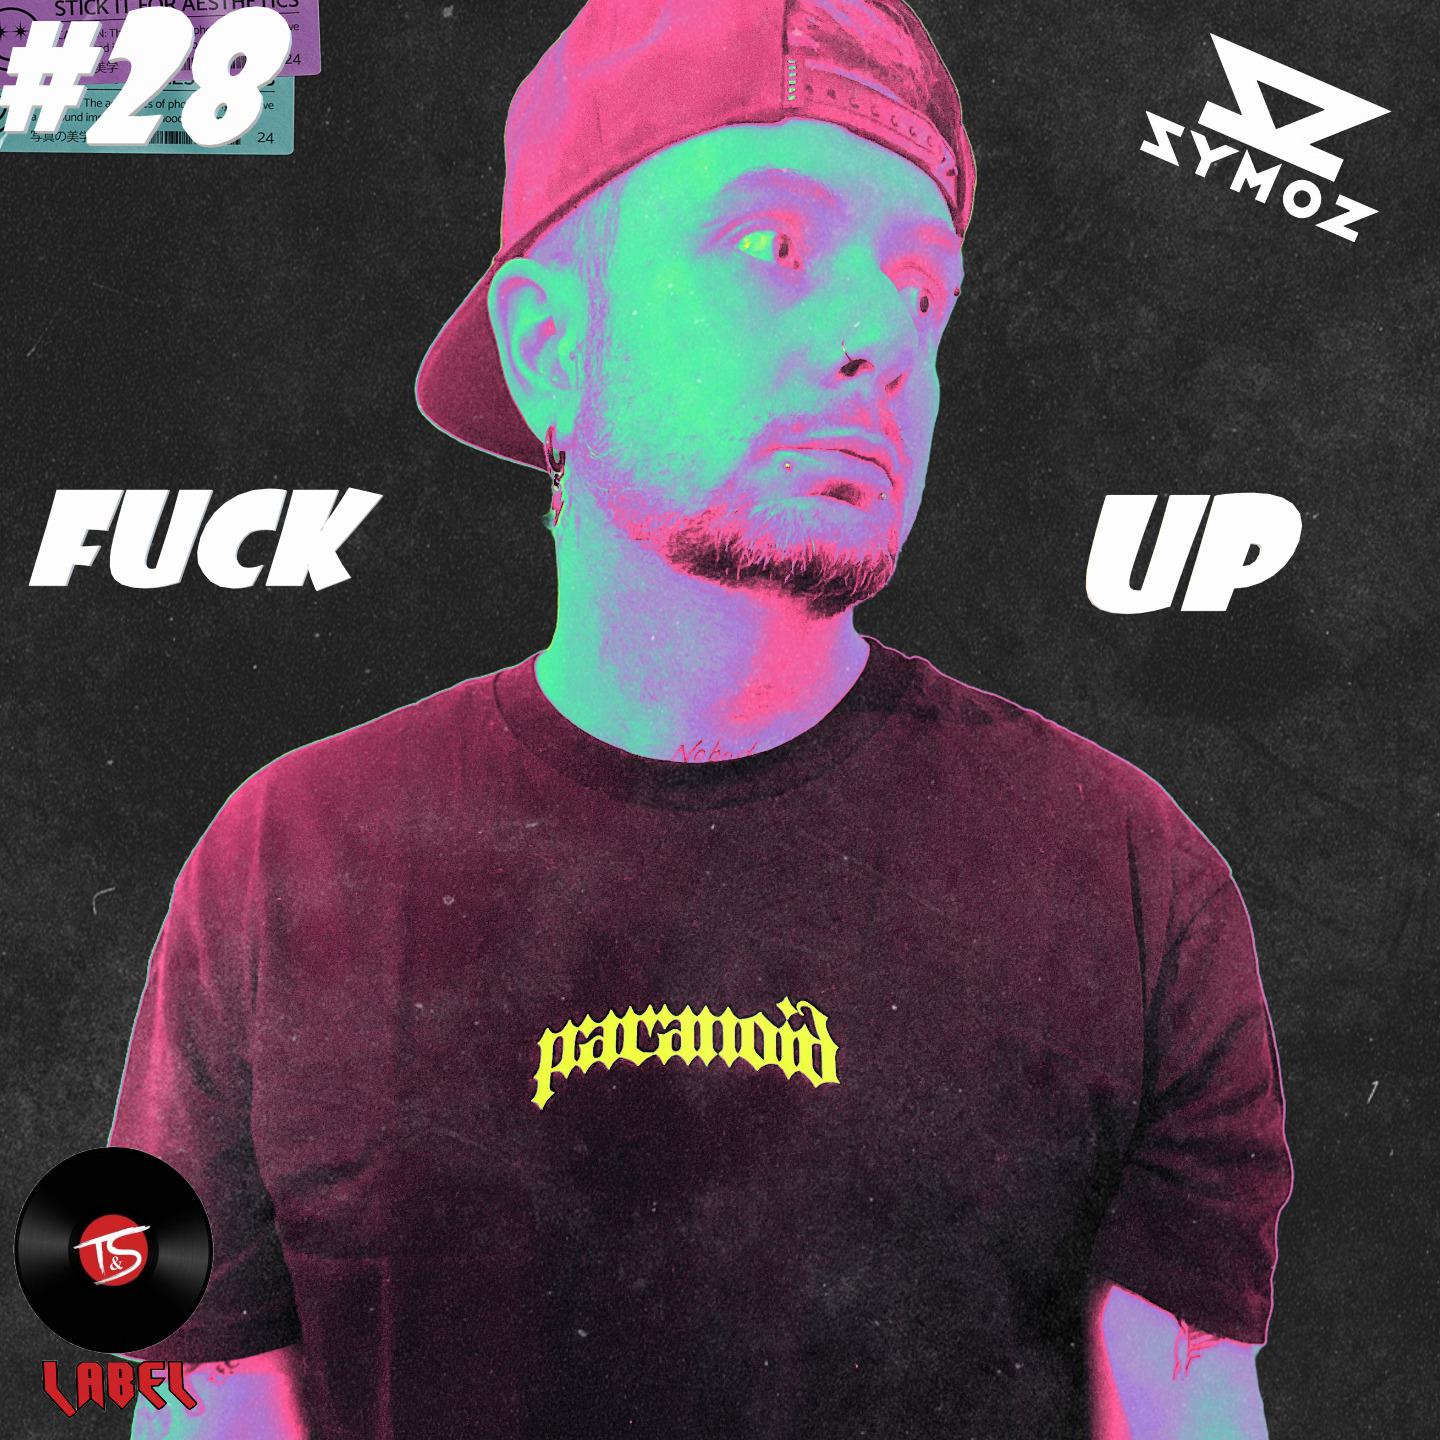 DJ Symoz - **** up (Jay Lock Mix)